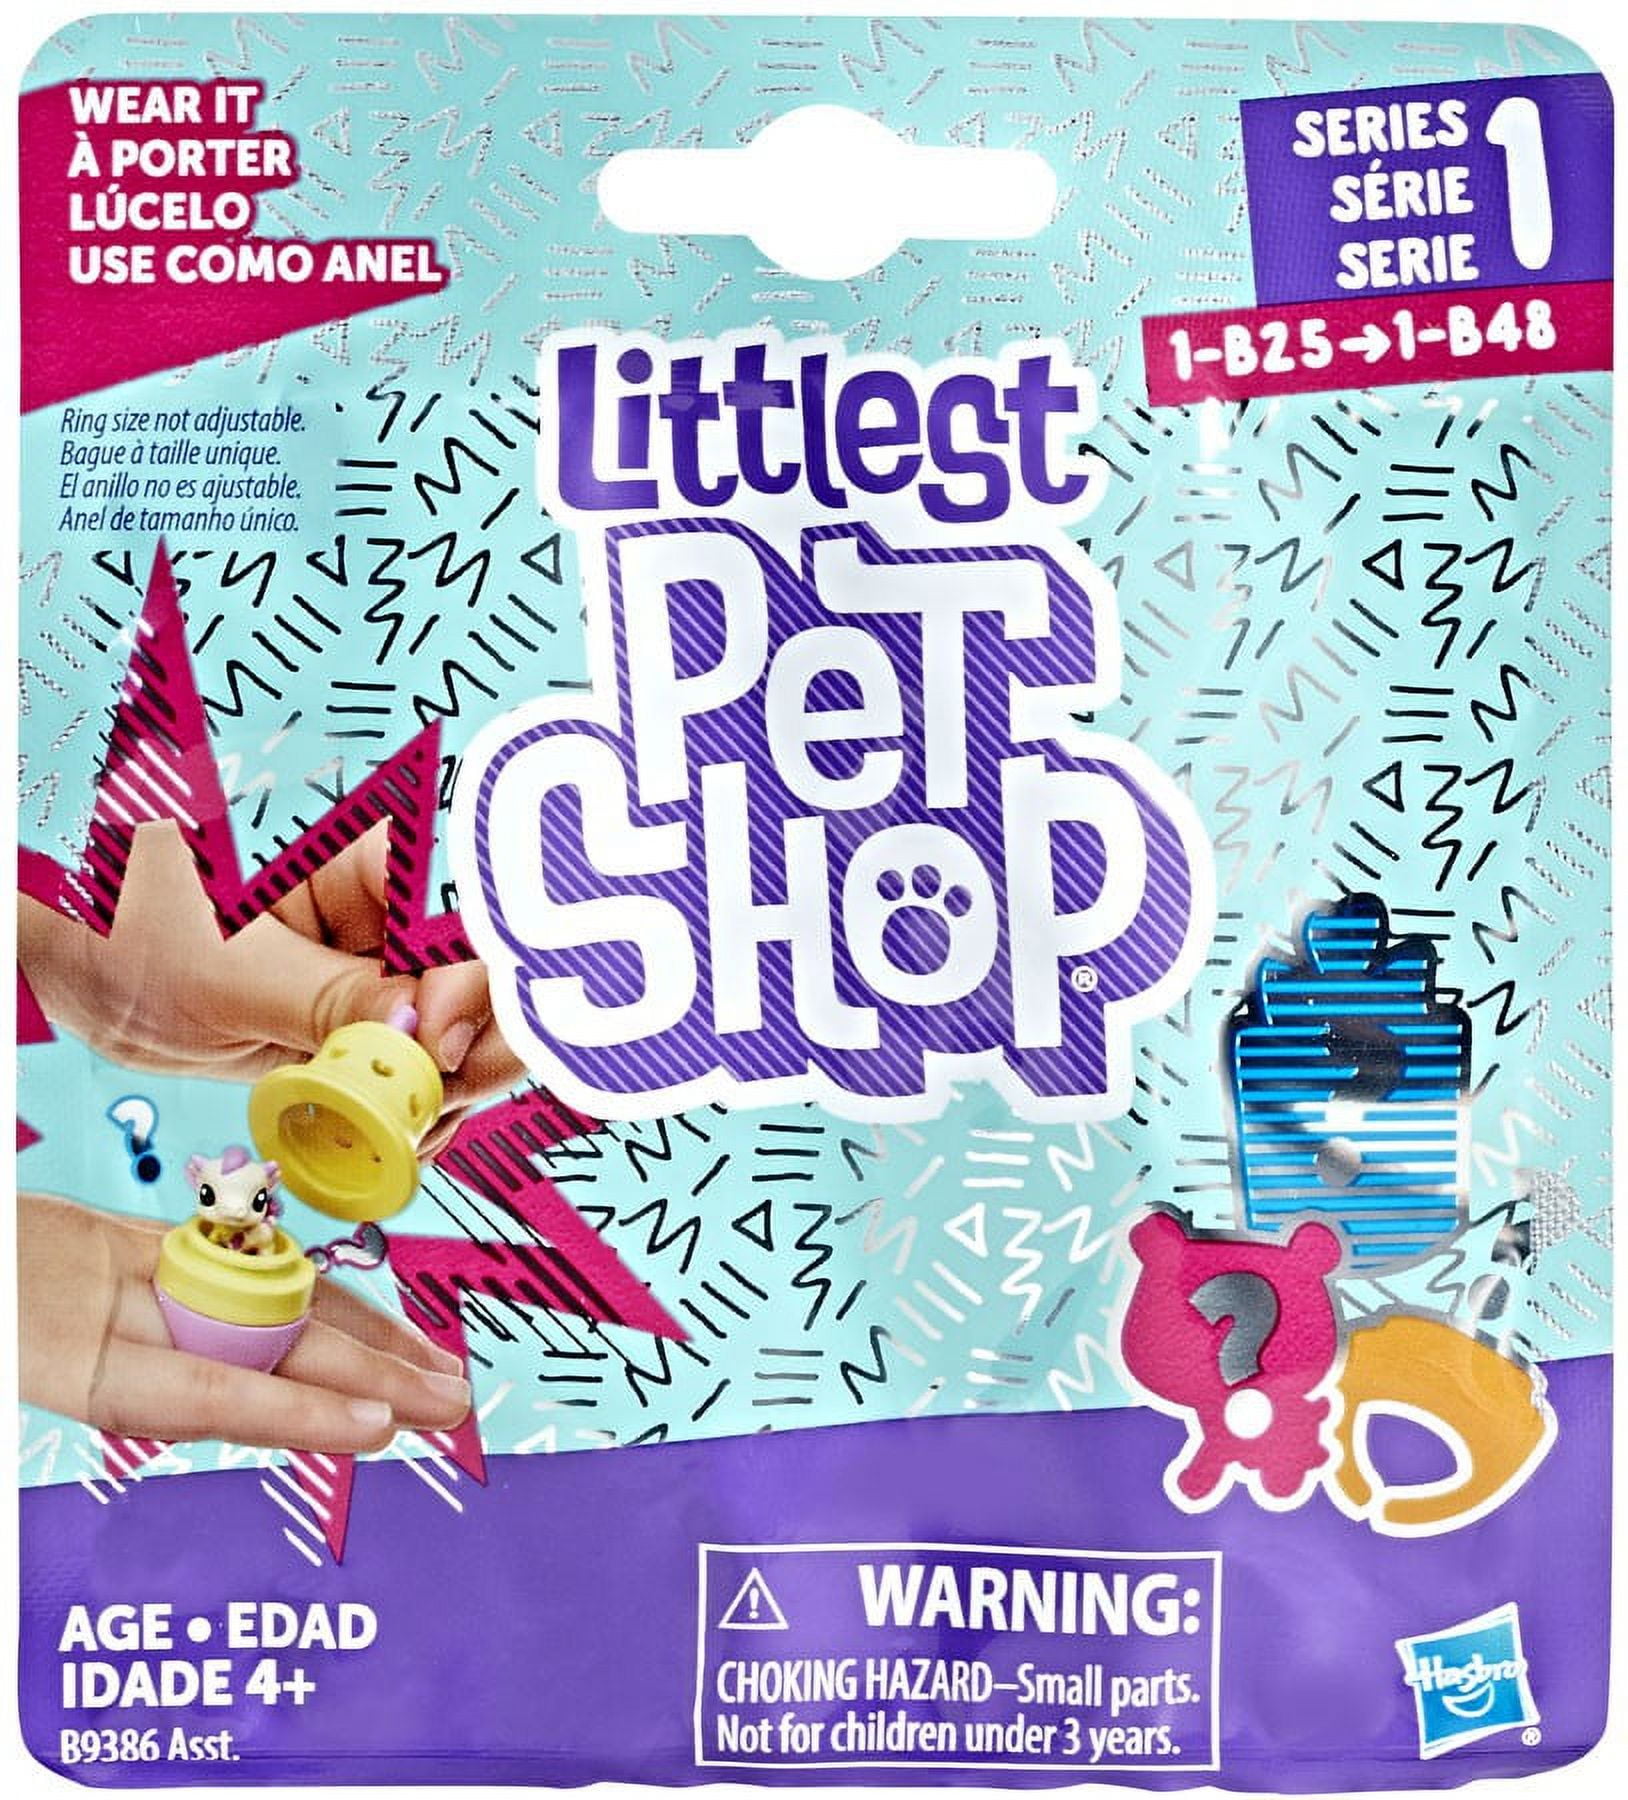 Littlest Pet Shop LPS Surprise Blind Bags 24 in Complete Full Box